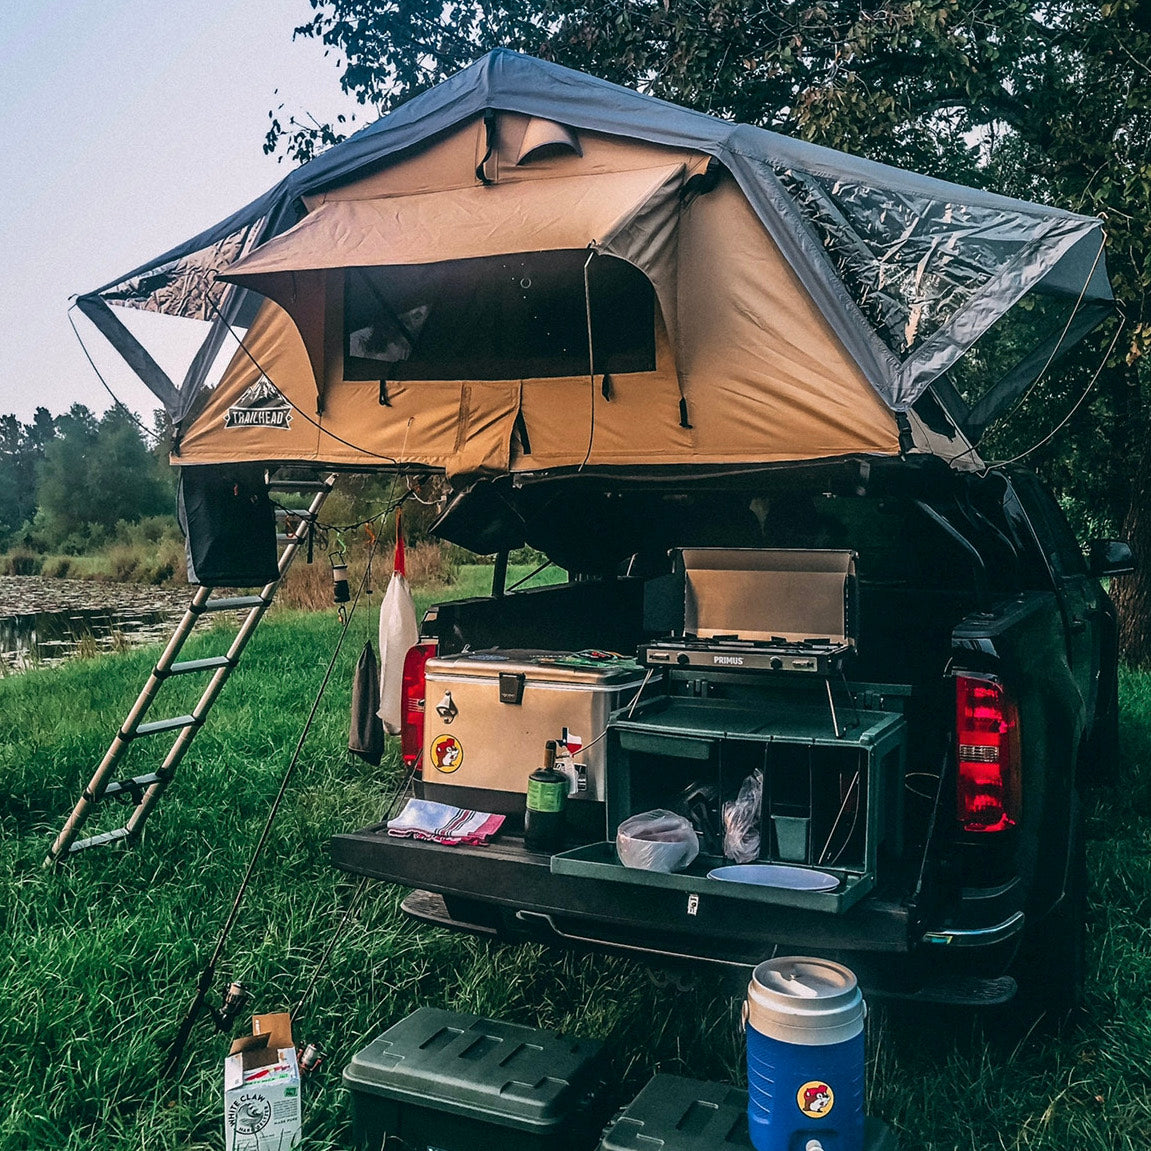 Building the Ultimate Camp Kitchen Setup - Eureka!